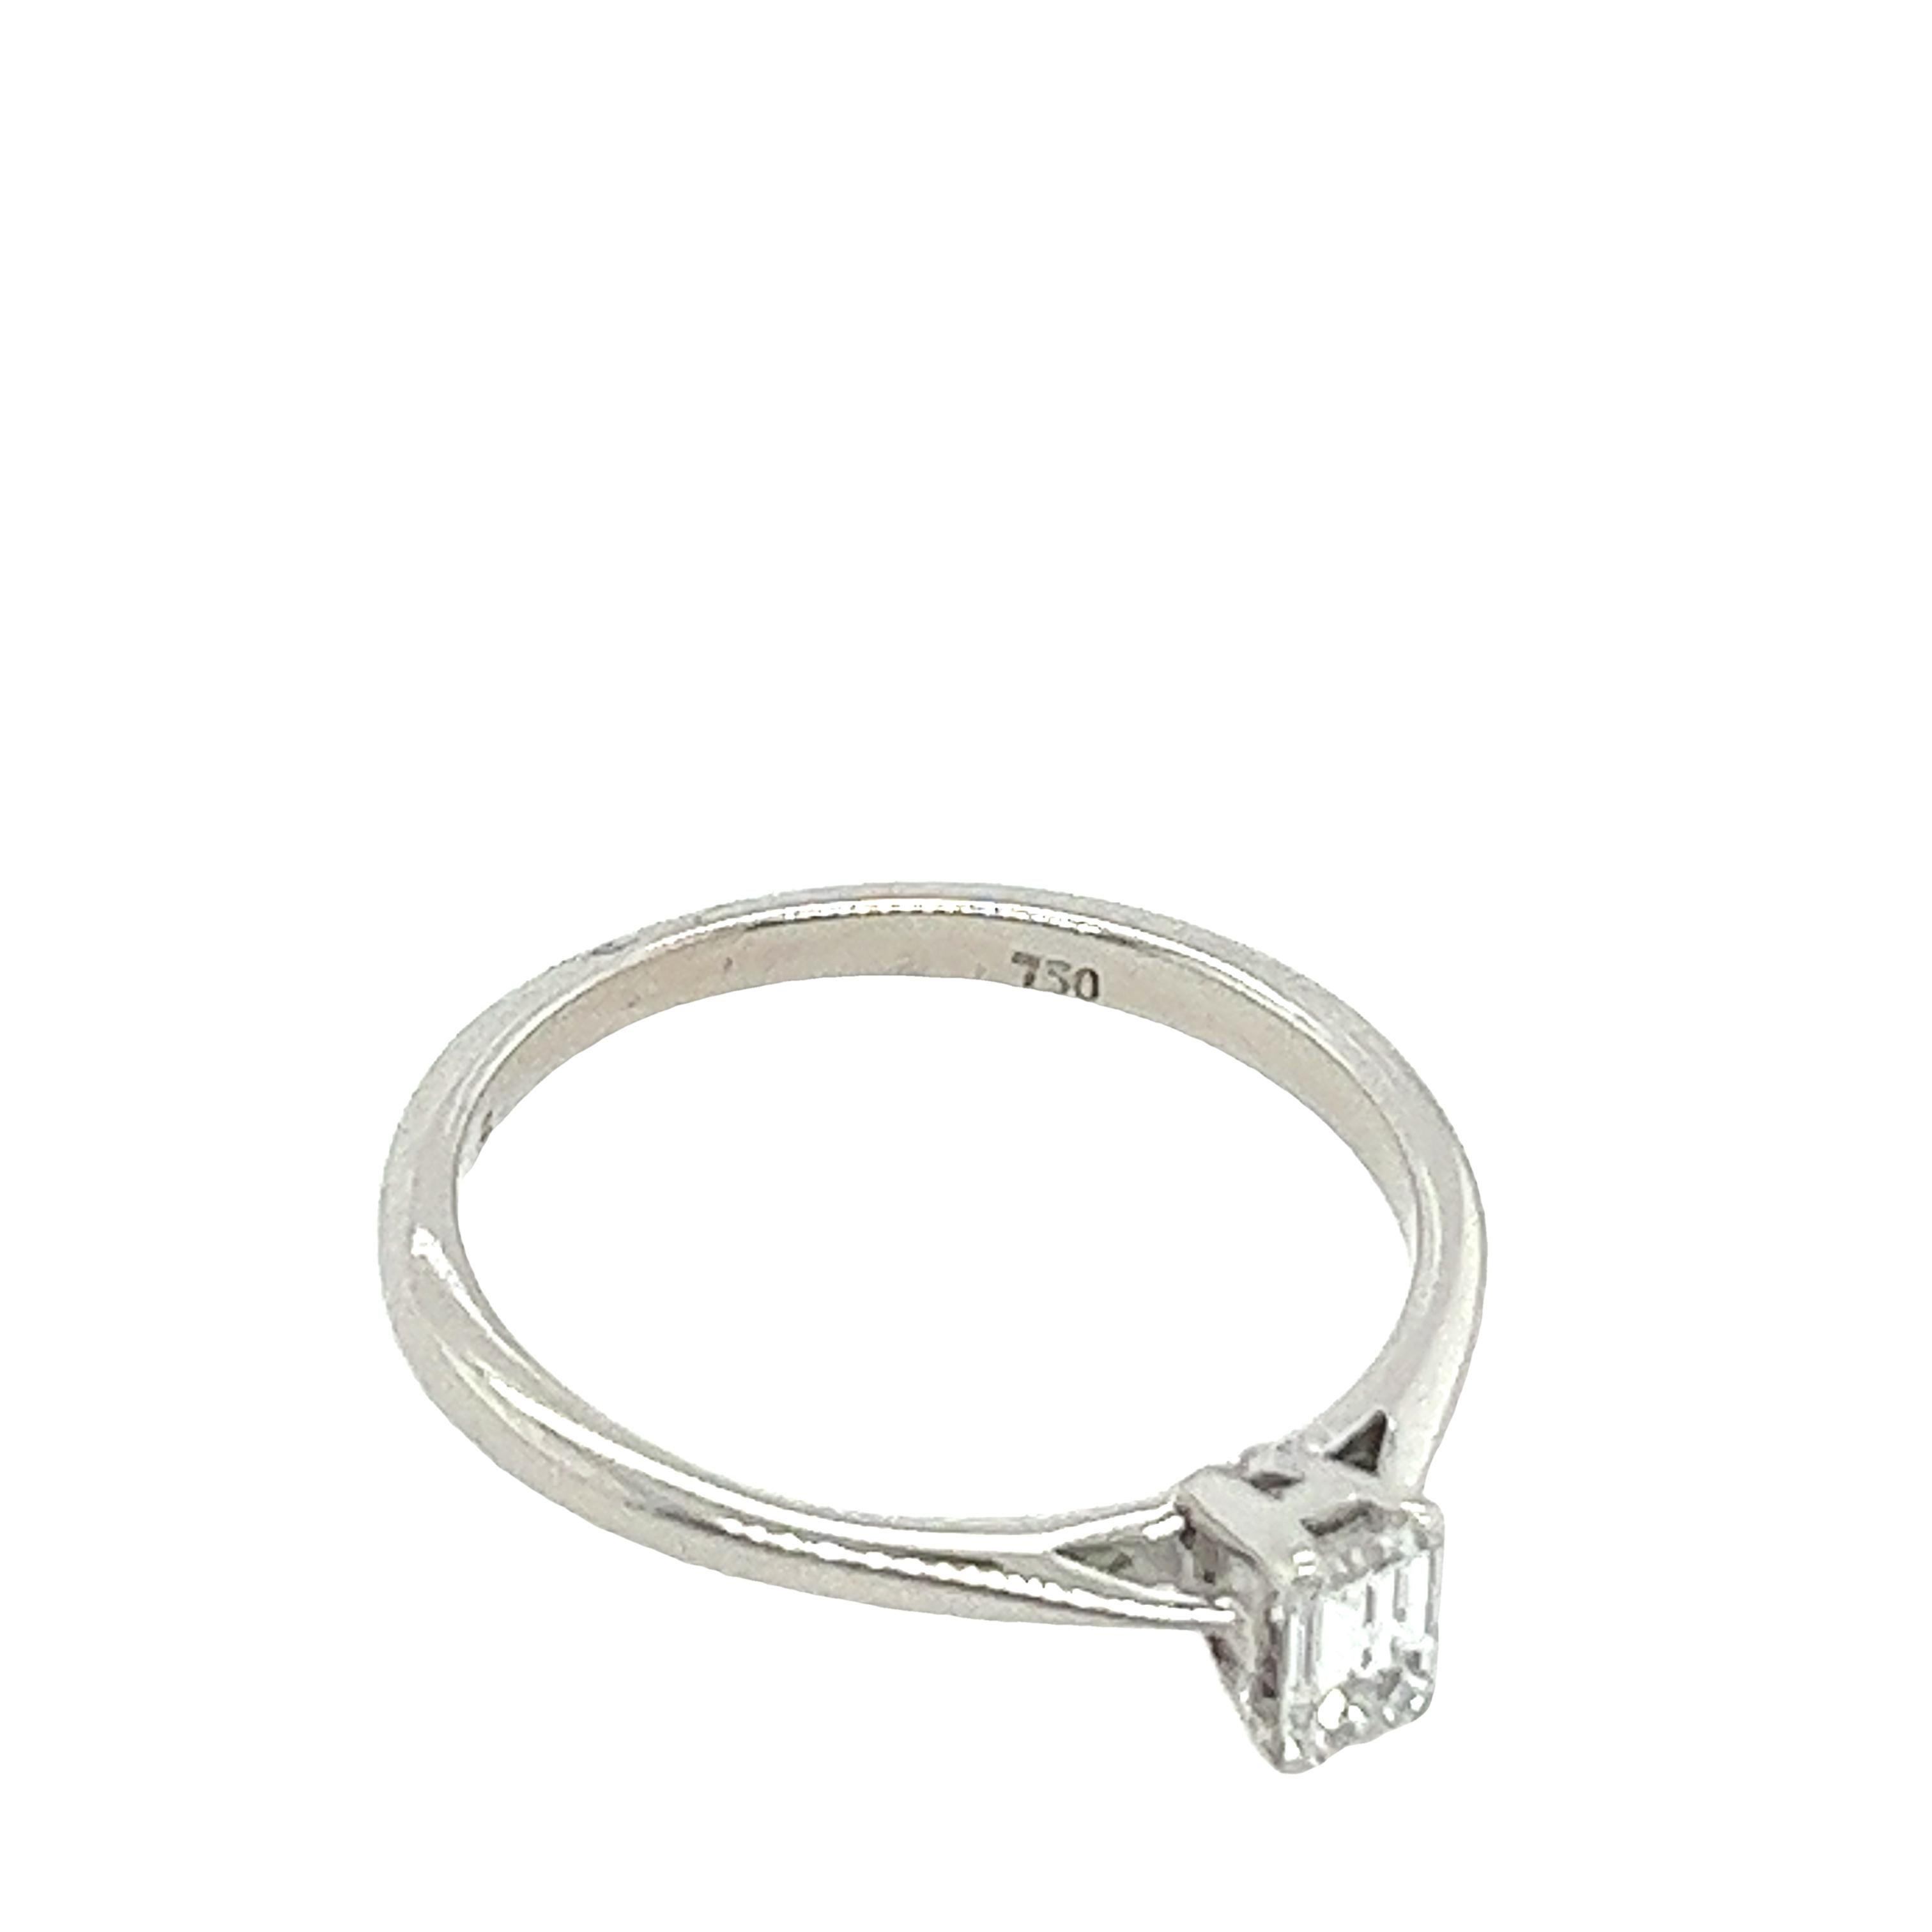 Emerald Cut 18ct White Gold Diamond Solitaire Ring Set With 0.20ct F-VS1 Emerald cut Diamond For Sale